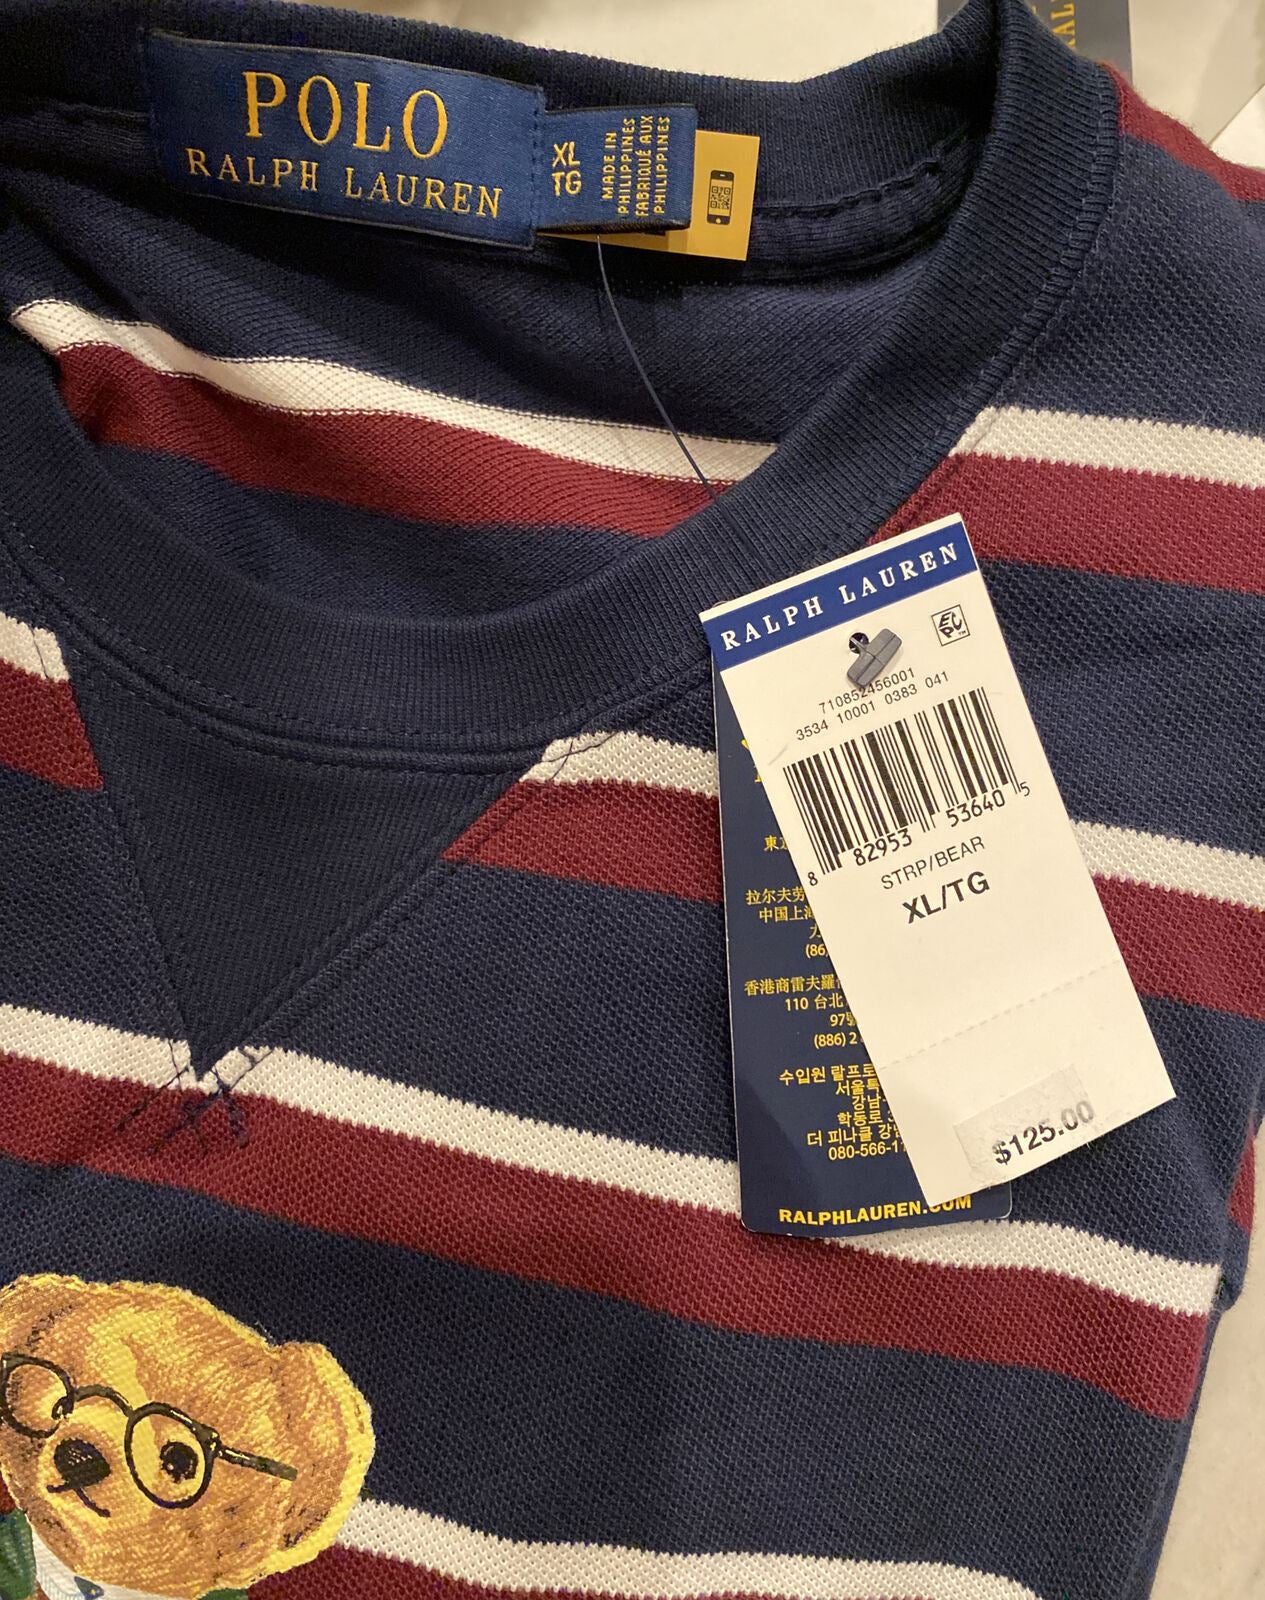 Neu mit Etikett: 125 $ Polo Ralph Lauren Bär gestreiftes Fleece-Sweatshirt Blau XL 